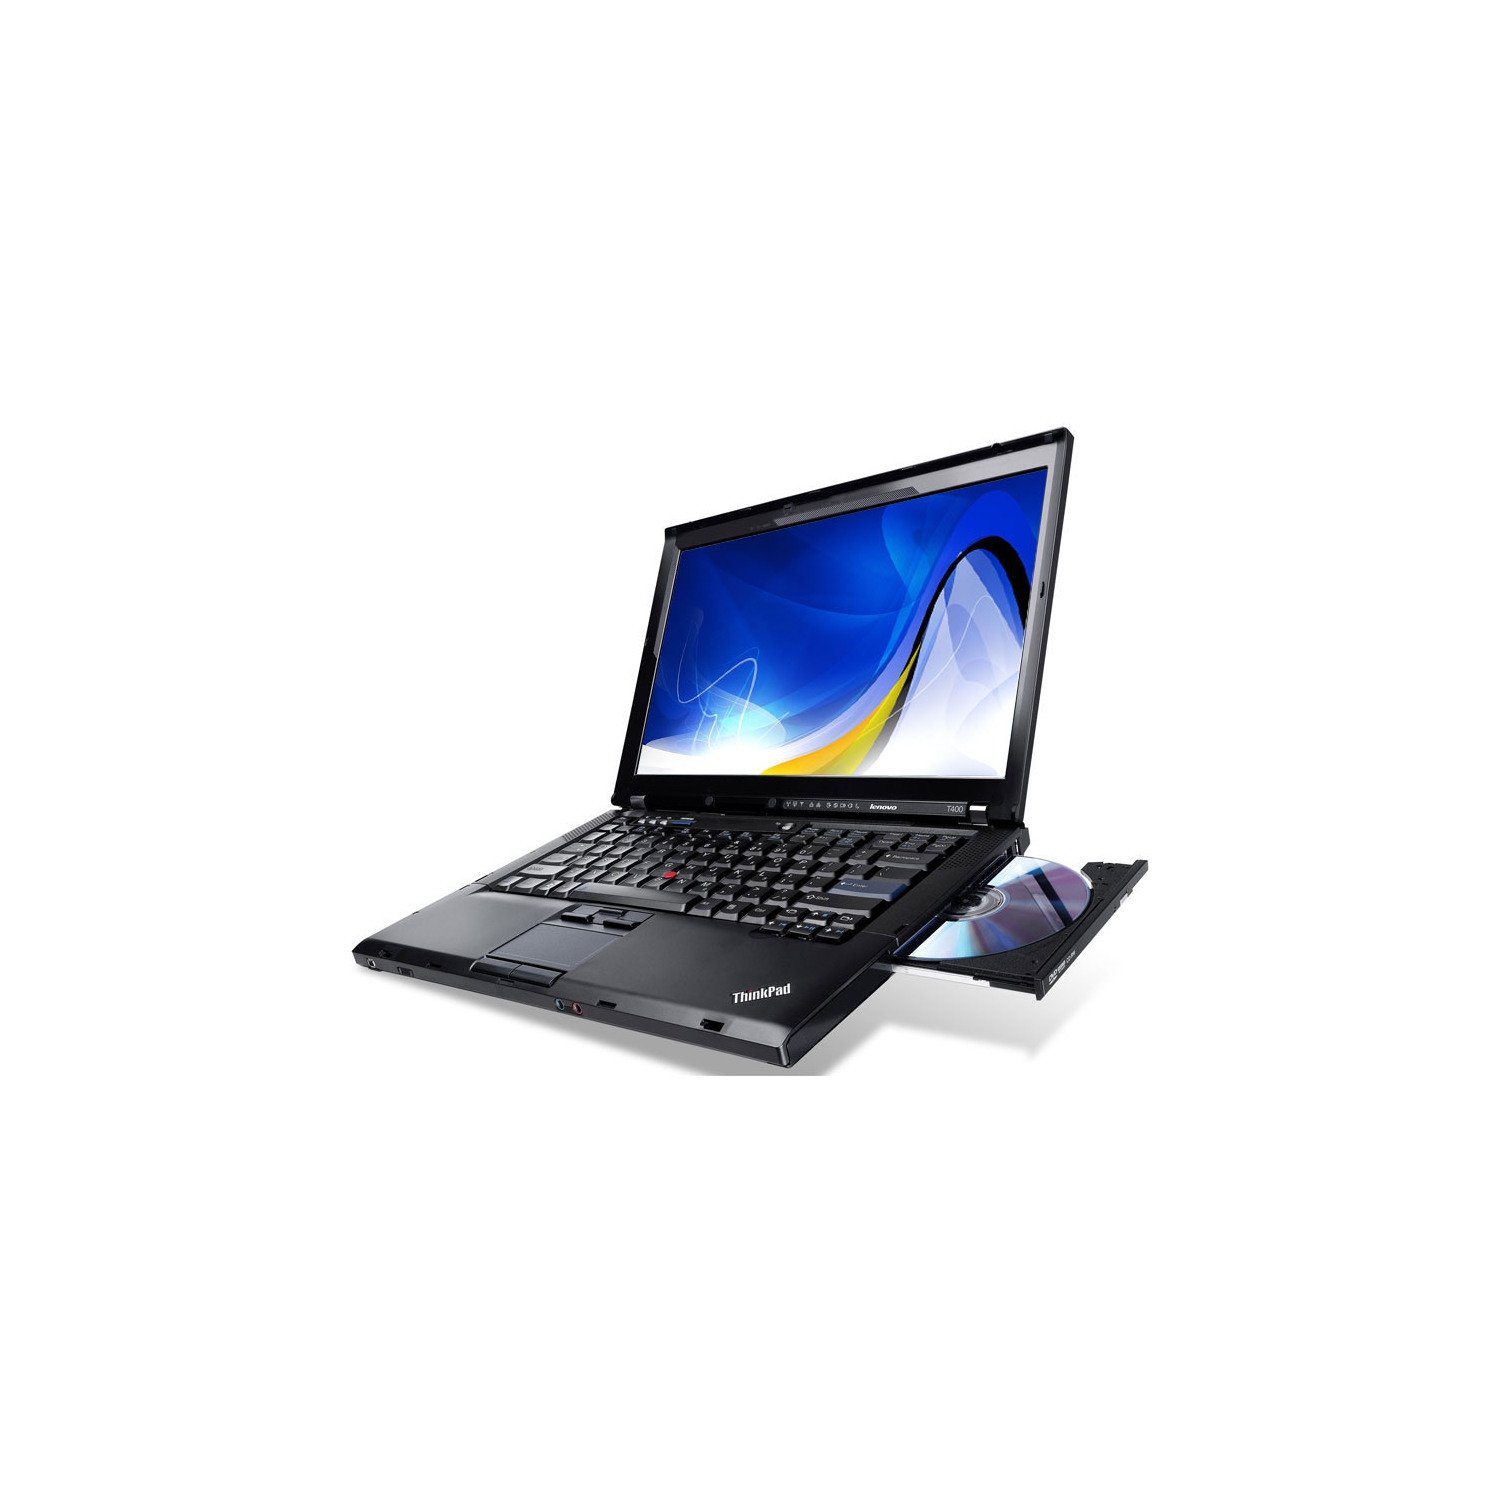 Refurbished (Good) - Lenovo ThinkPad T410 i5 2.4GHz 8GB 320GB CMB Windows 10 Pro 64 Laptop Computer